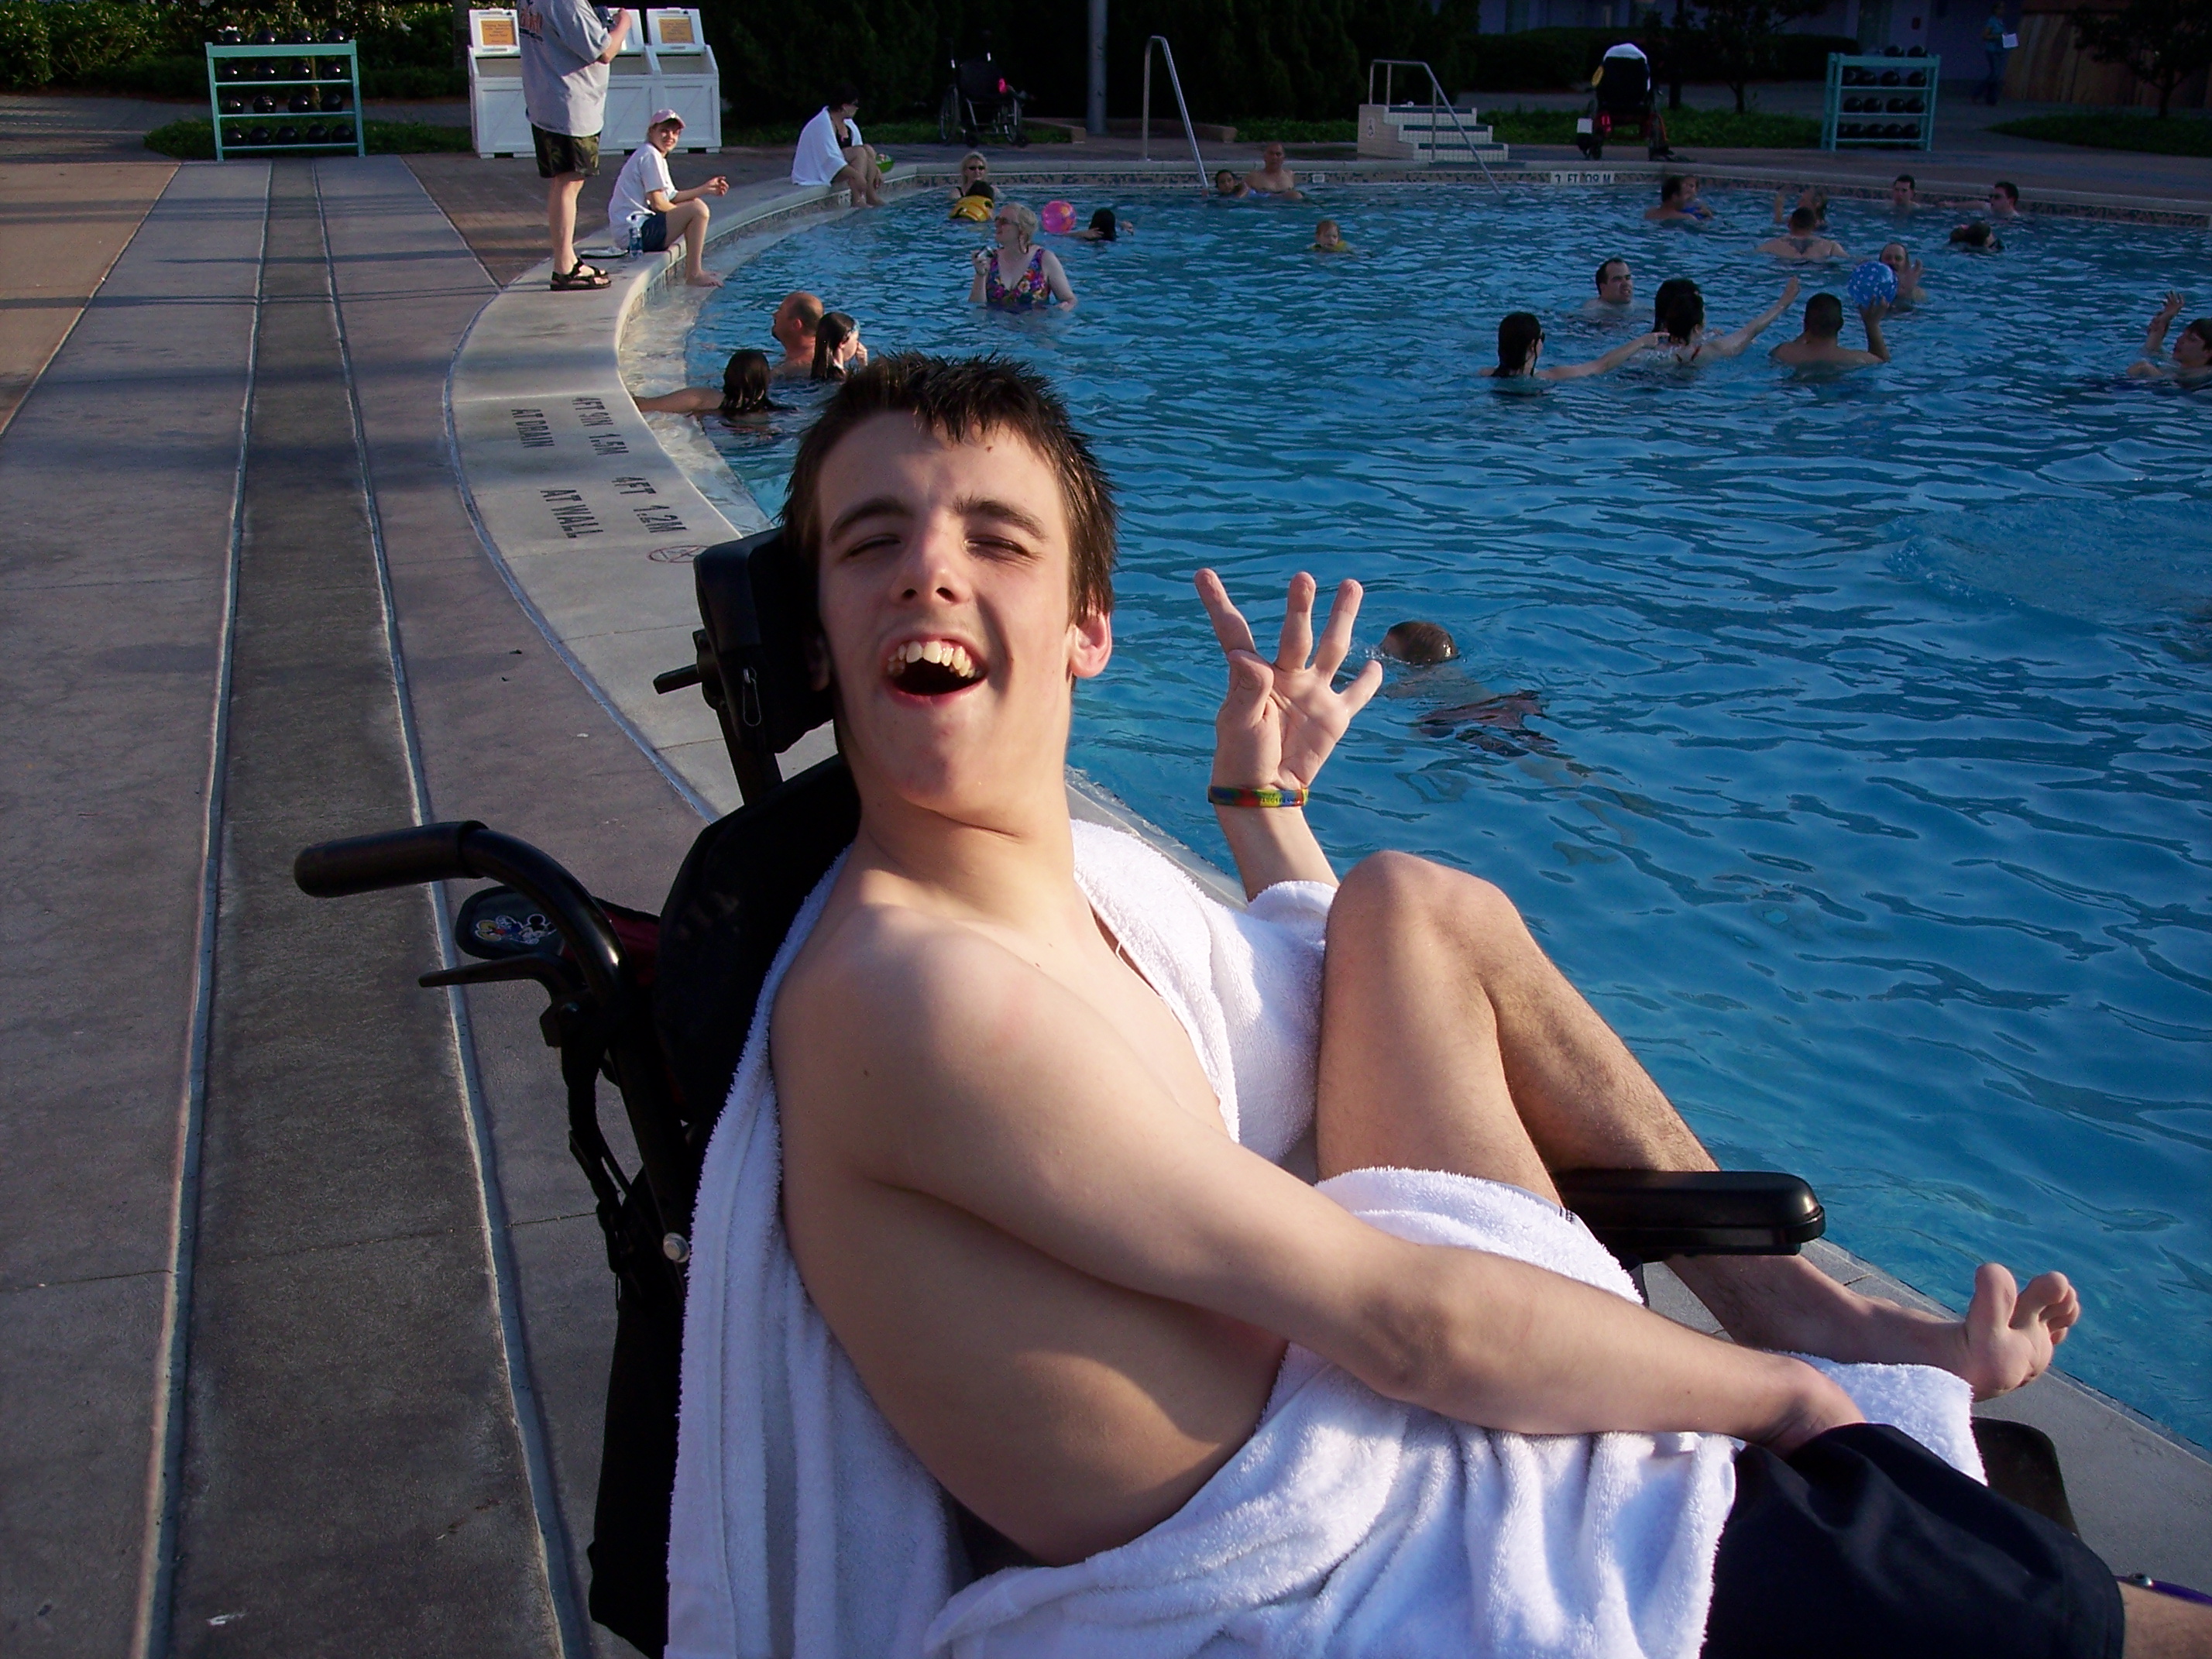 Nick hanging at the pool